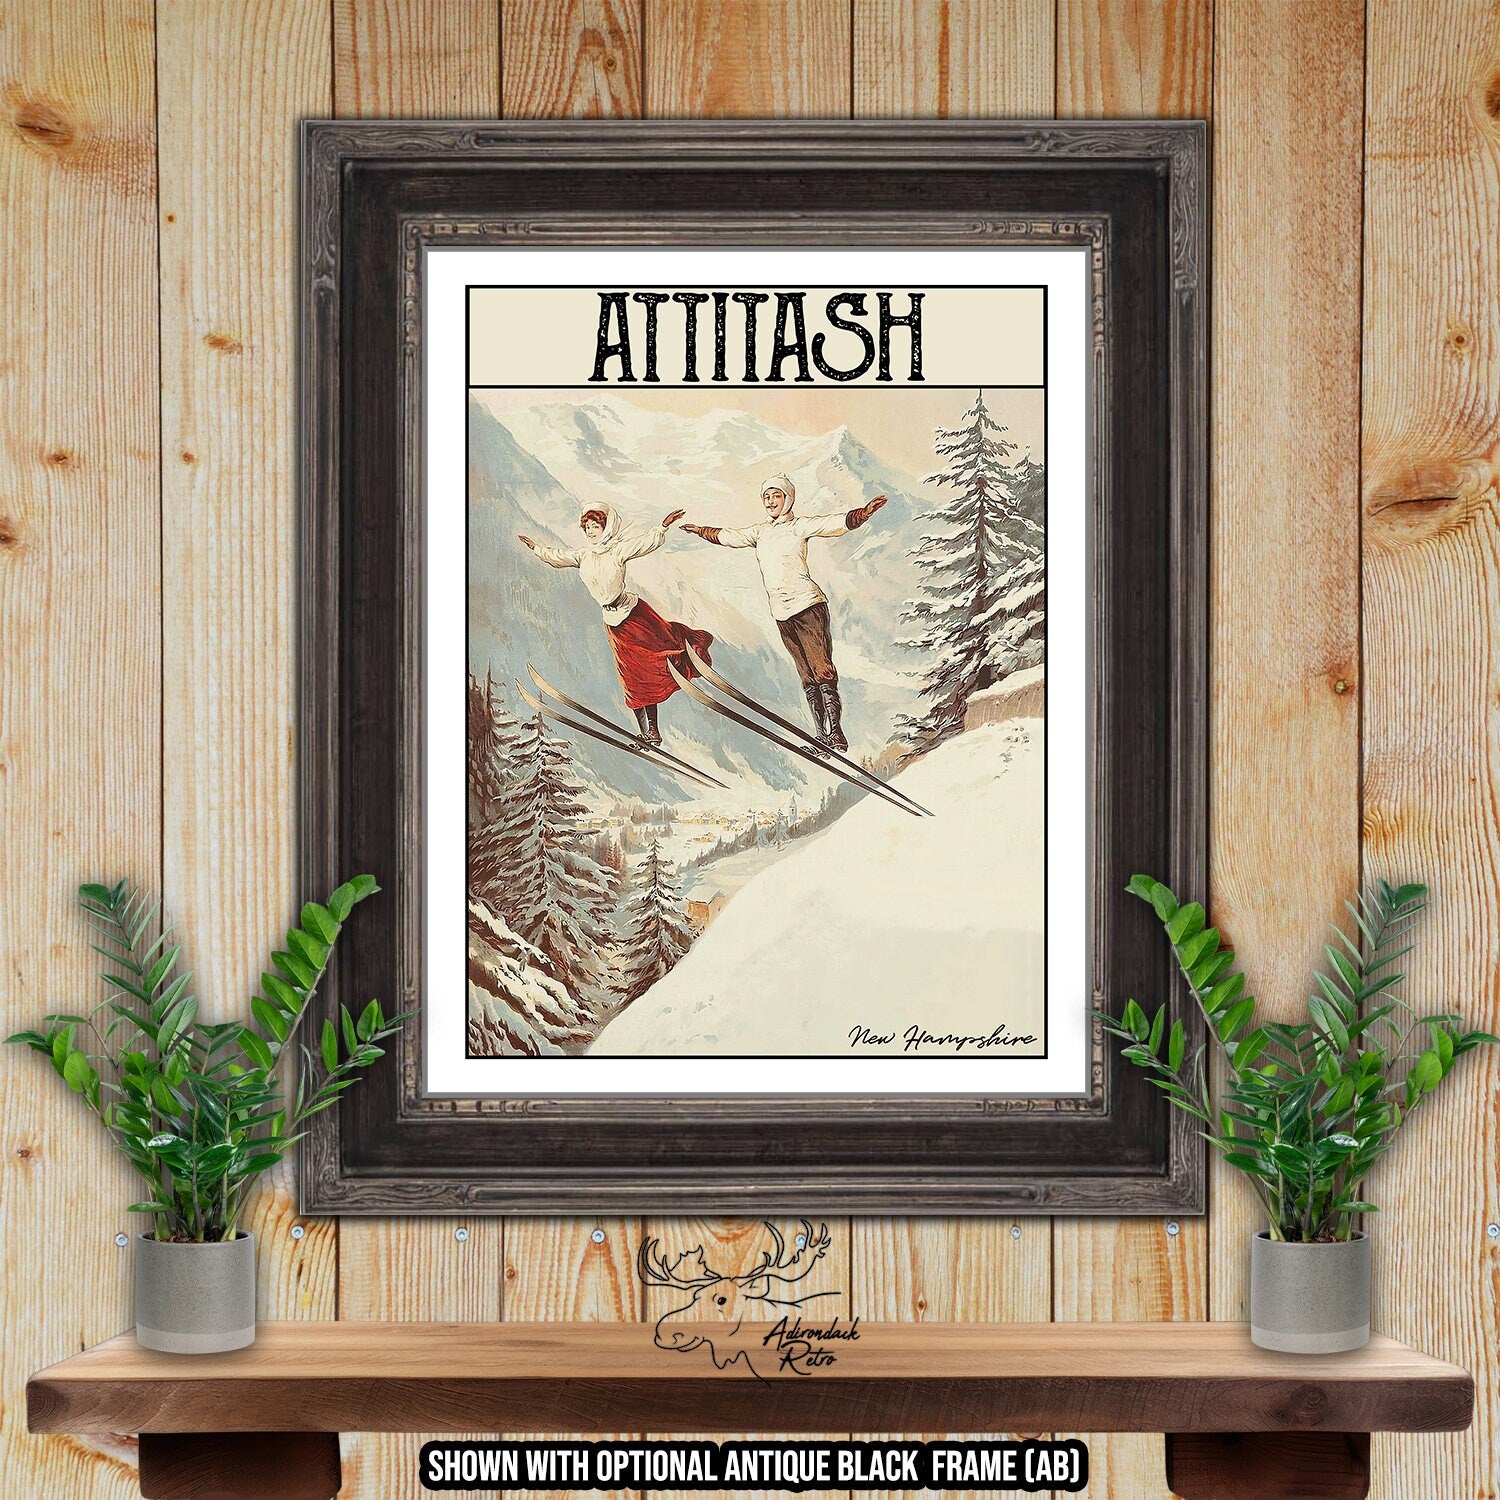 Attitash New Hampshire Retro Ski Resort Art Print at Adirondack Retro